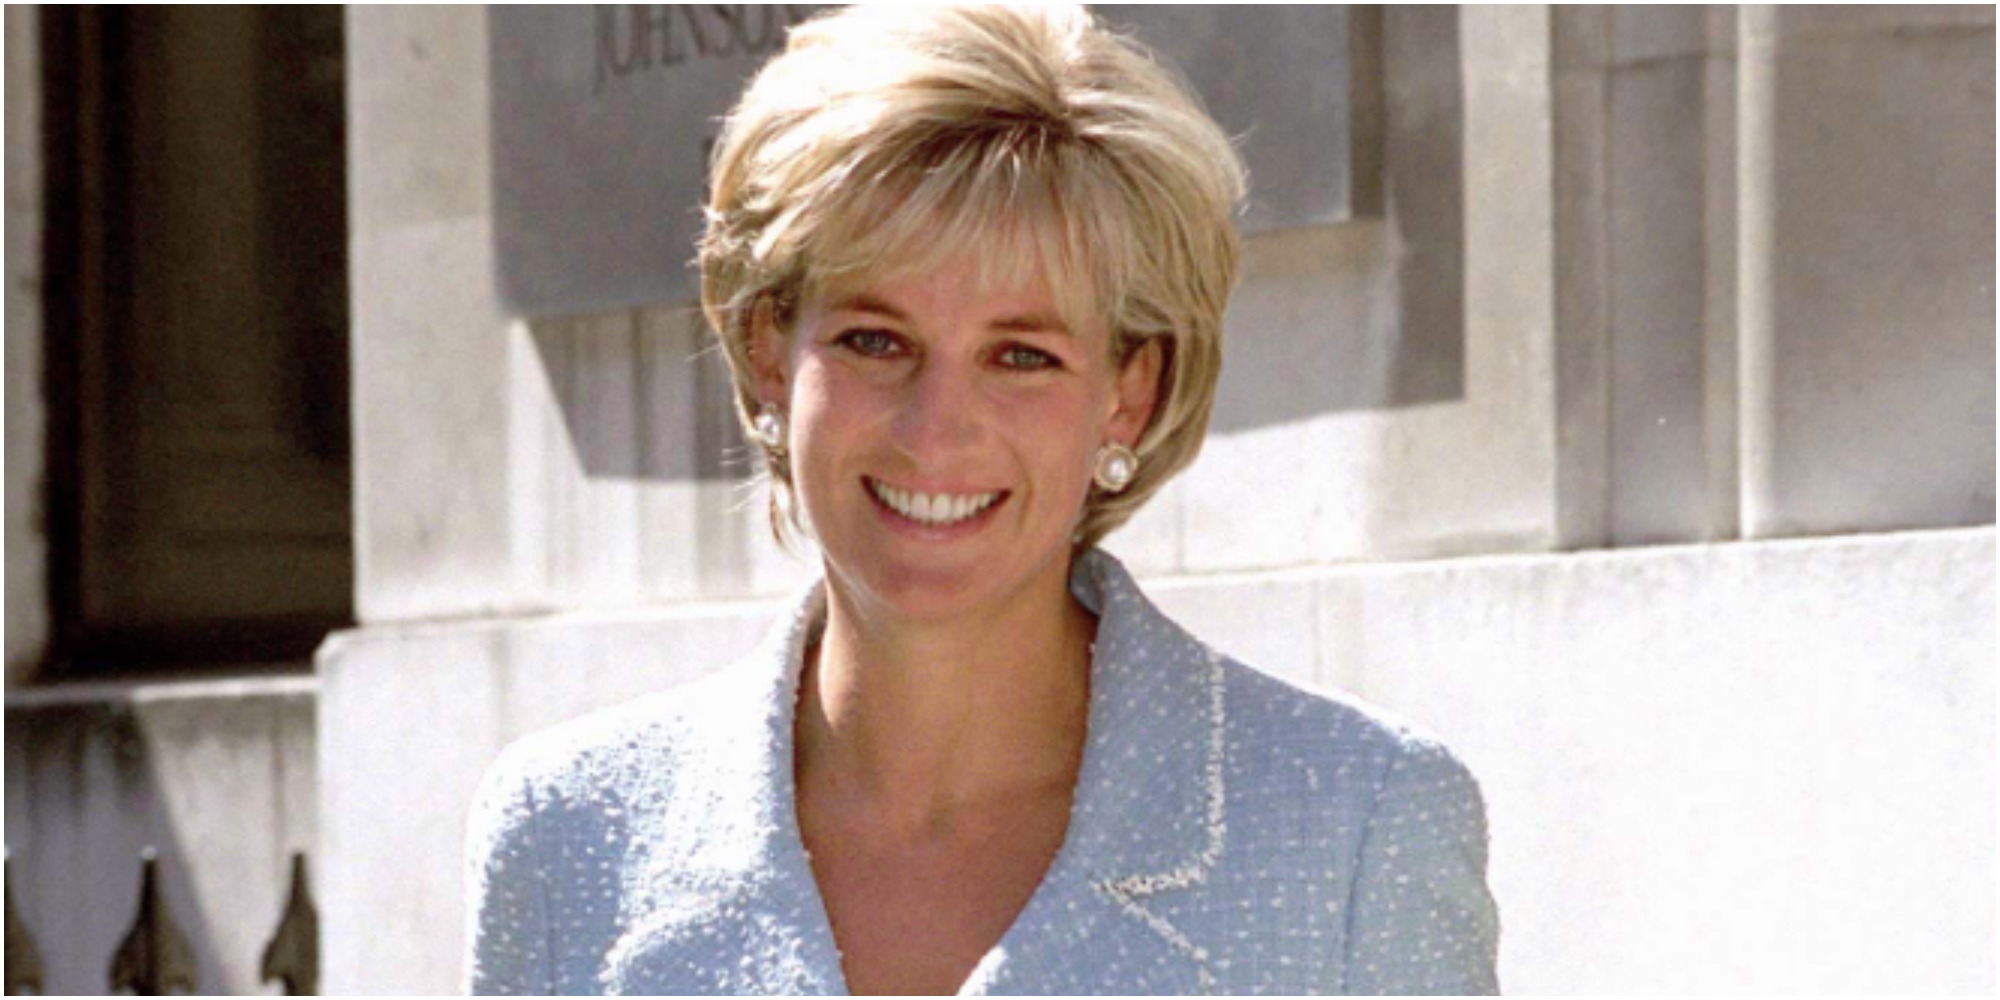 Princess Diana feminist role model in blue suit.